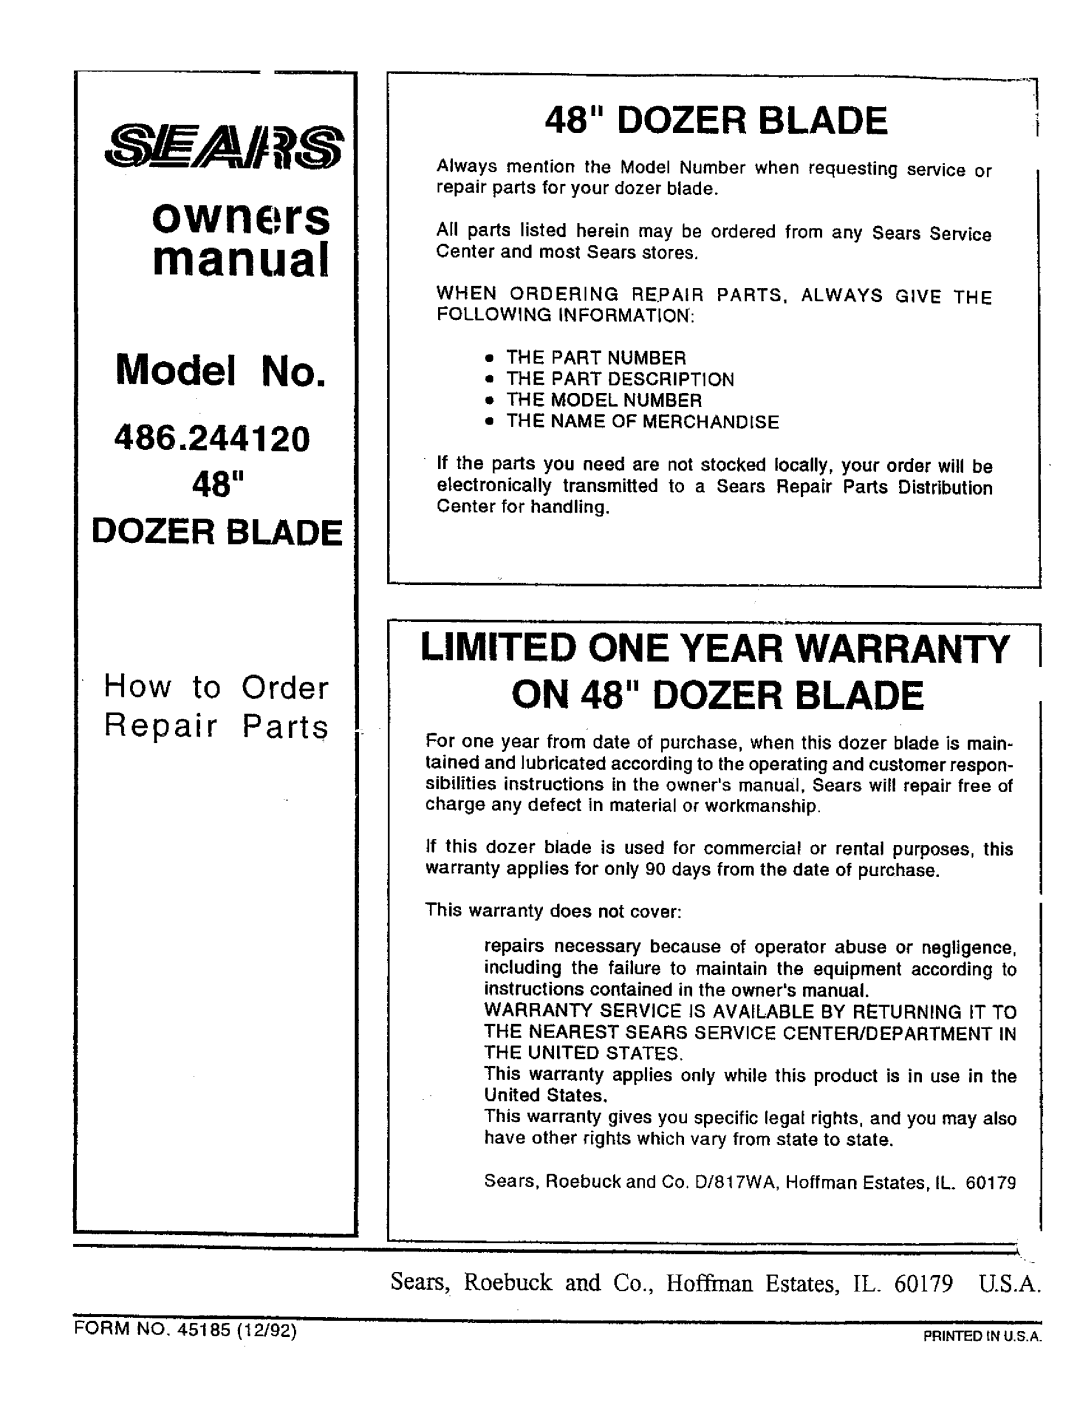 Sears owner manual Model No B, Dozer Blade, Limited One Year Warranty, 486.2441201, ON 48 DOZER BLADE 